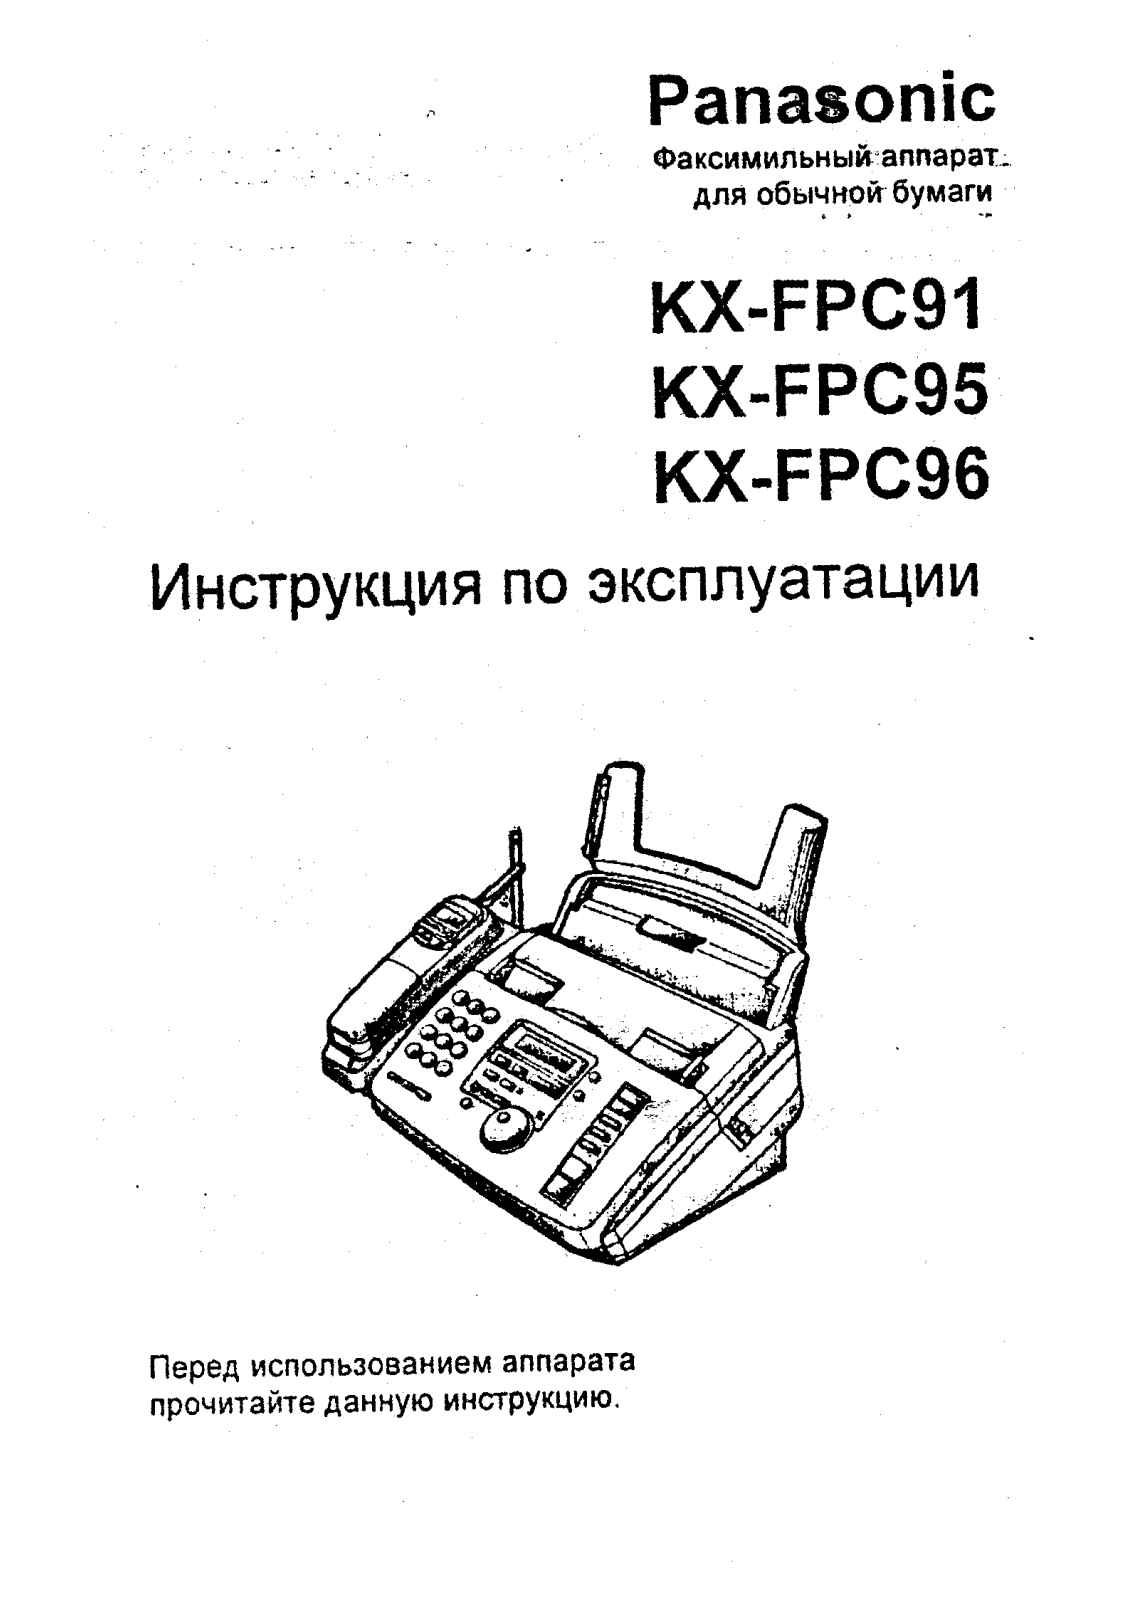 PANASONIC KX-FPC91, KX-FPC95, KX-FPC96 User Manual